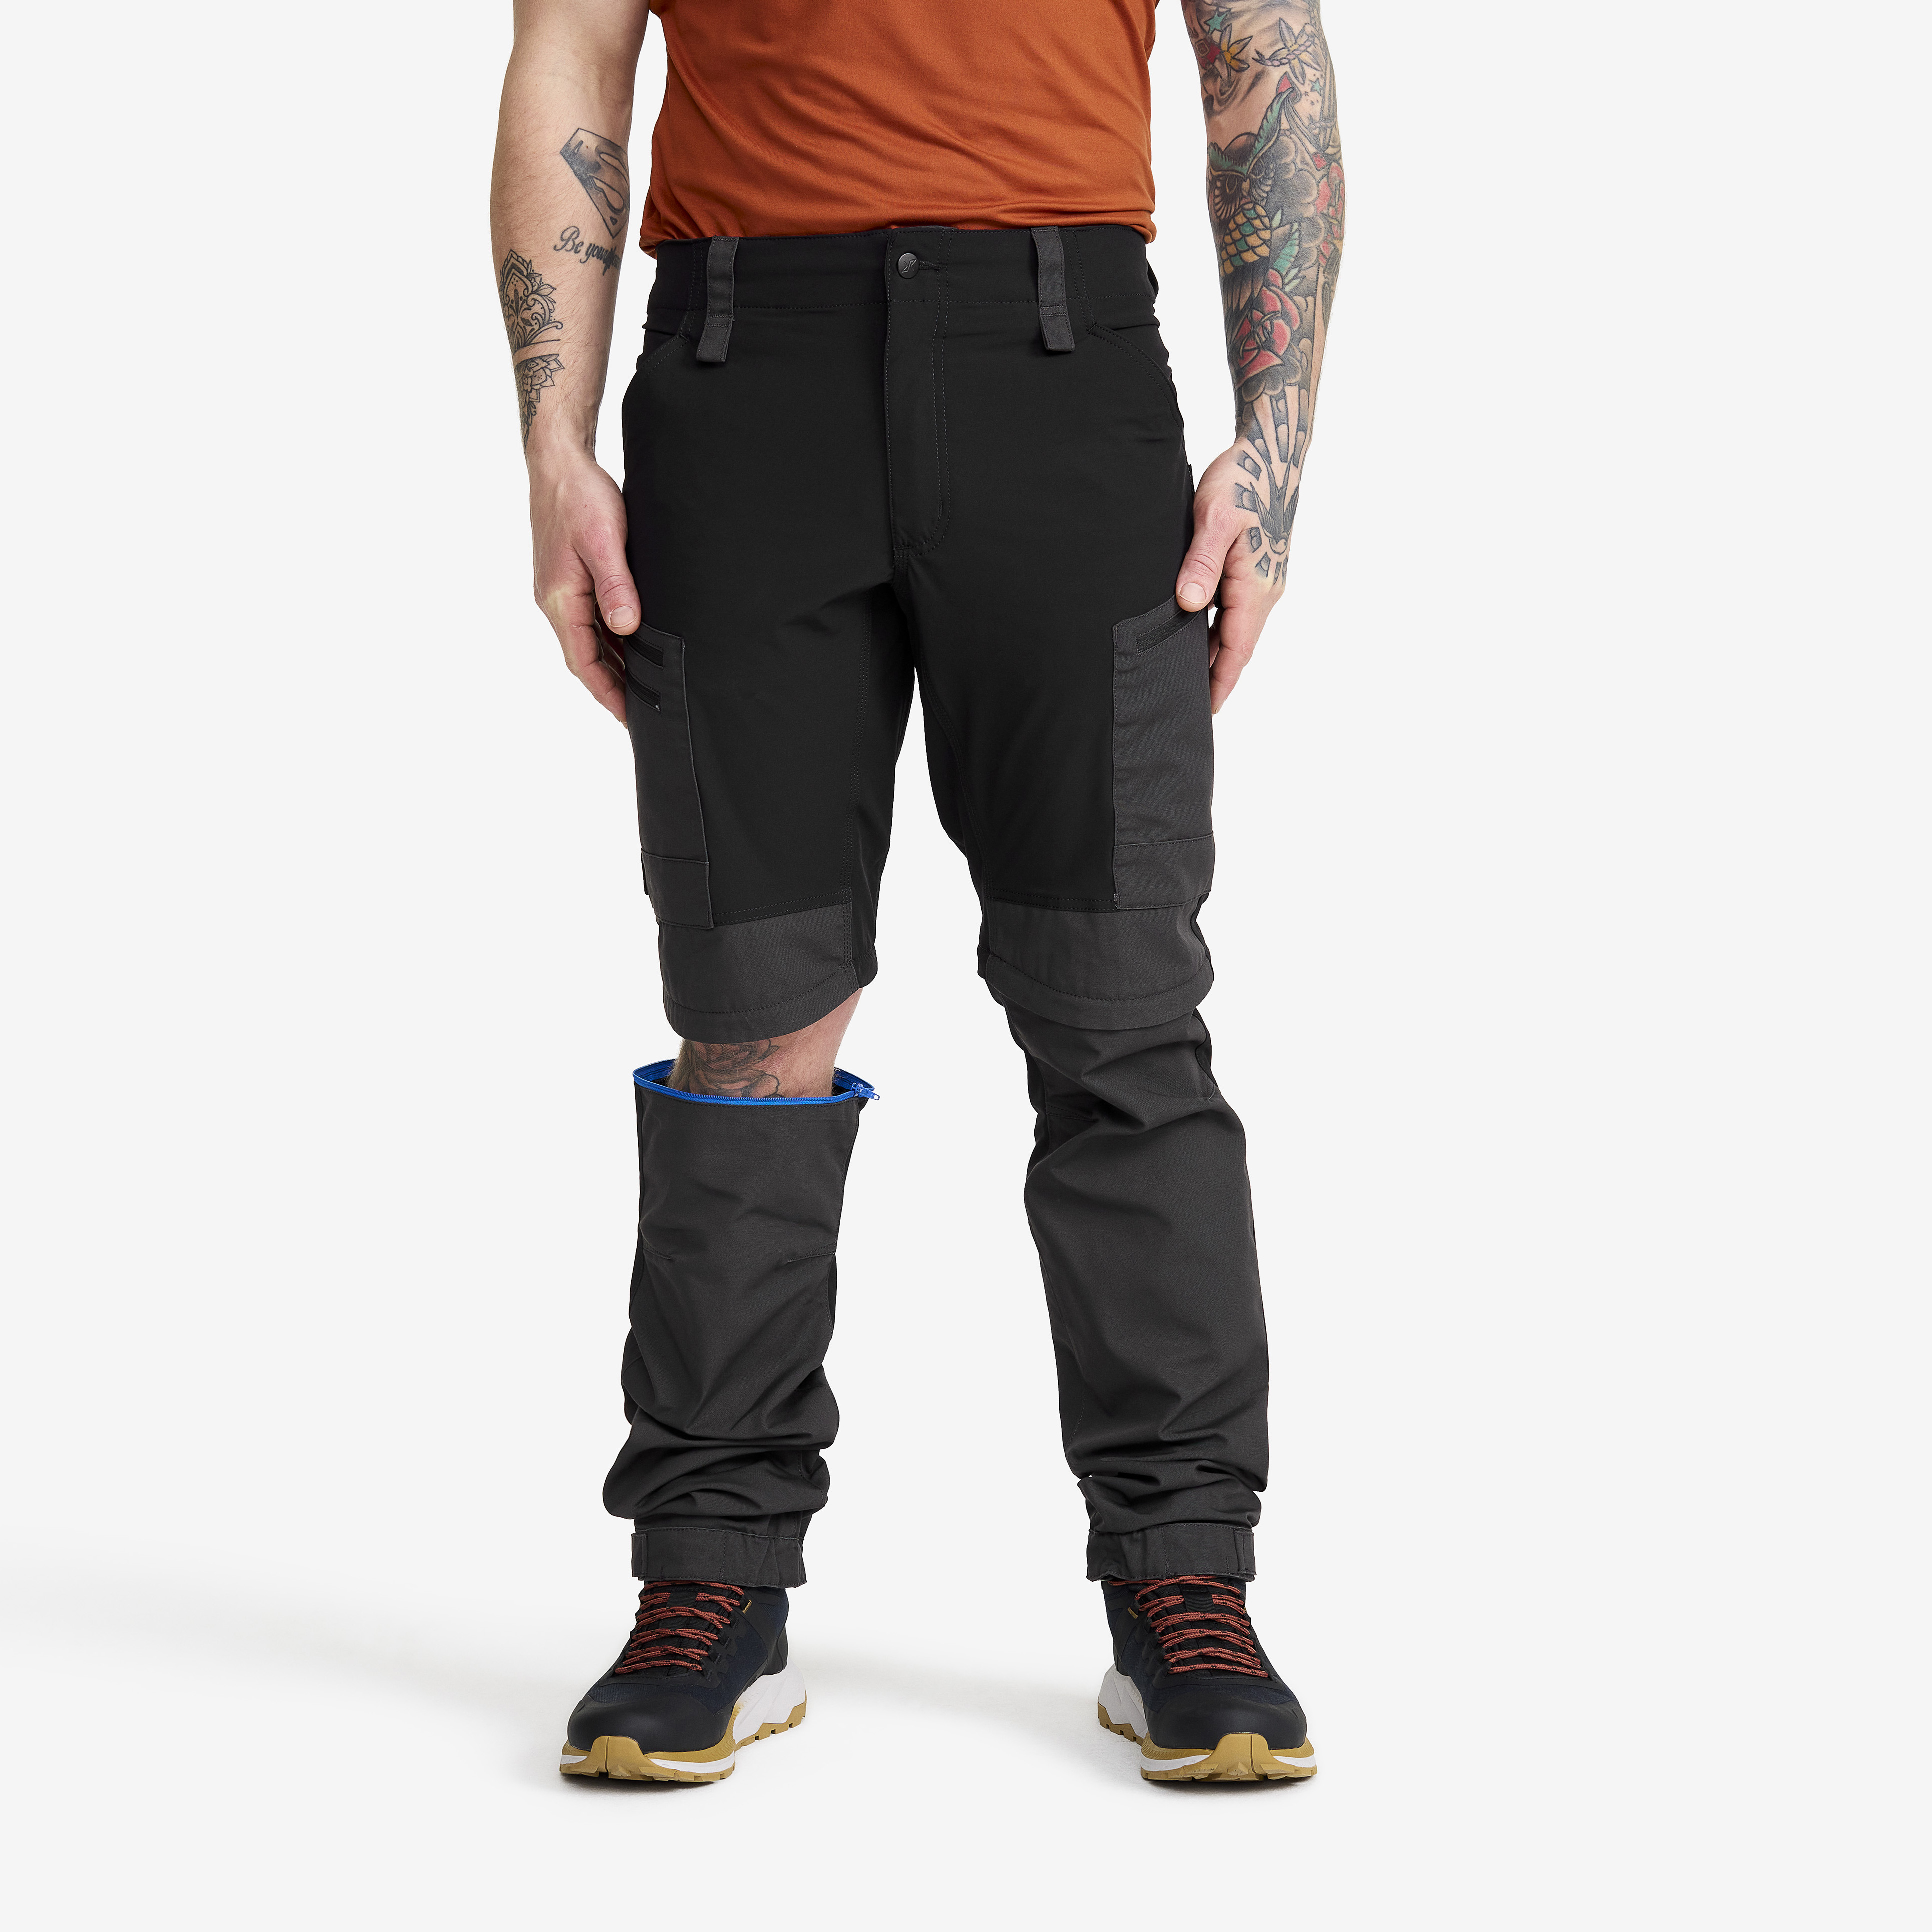 RVRC GP Pro Zip-off hiking pants for men in black